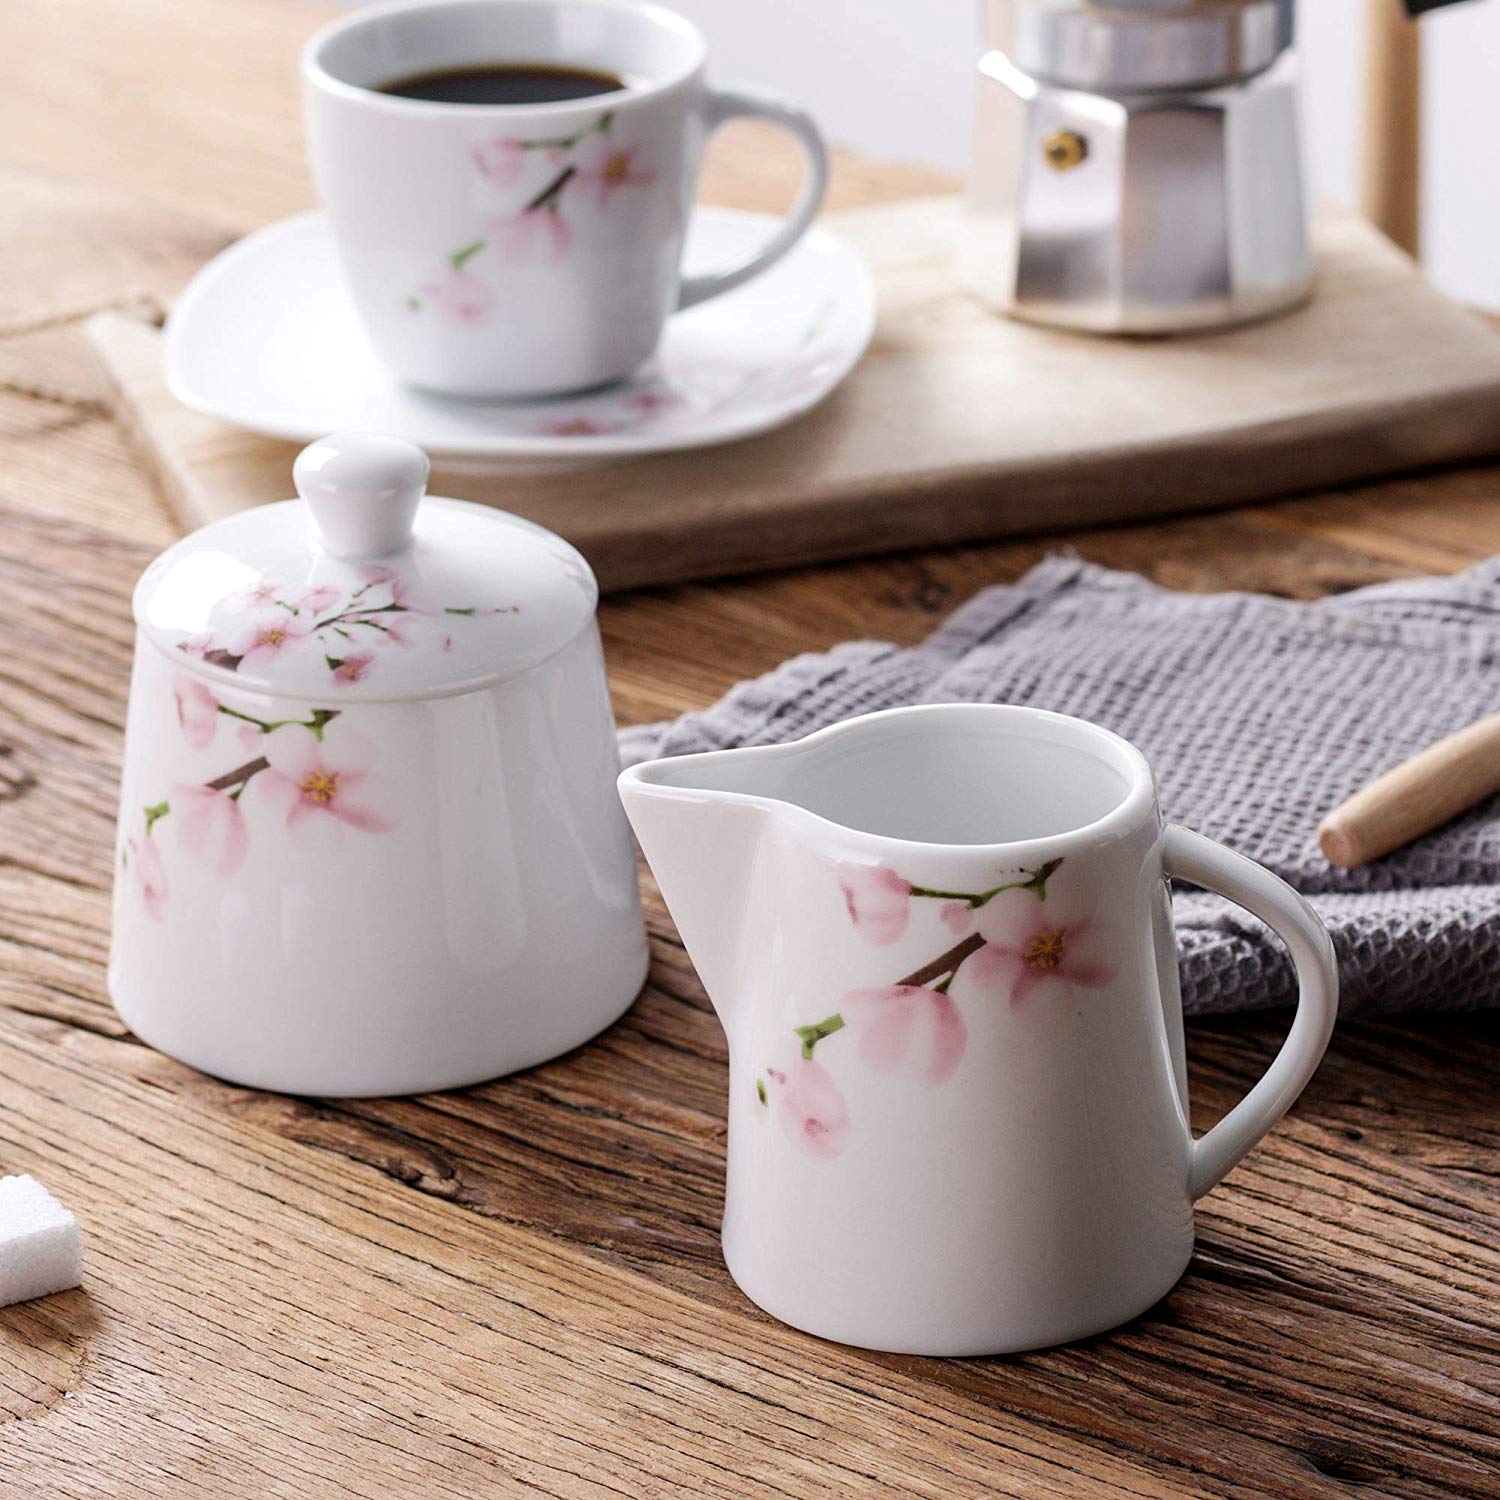 Annie Ceramic Porcelain Milk/Cream Serving Jug and Sugar Bowl Pot Set - Nordic Side - ANNIE, Bowl, Ceramic, CoffeeTea, Cream, CreamerSugar, FamilyOffice, Jug, Milk, Porcelain, Pot, Serving, S